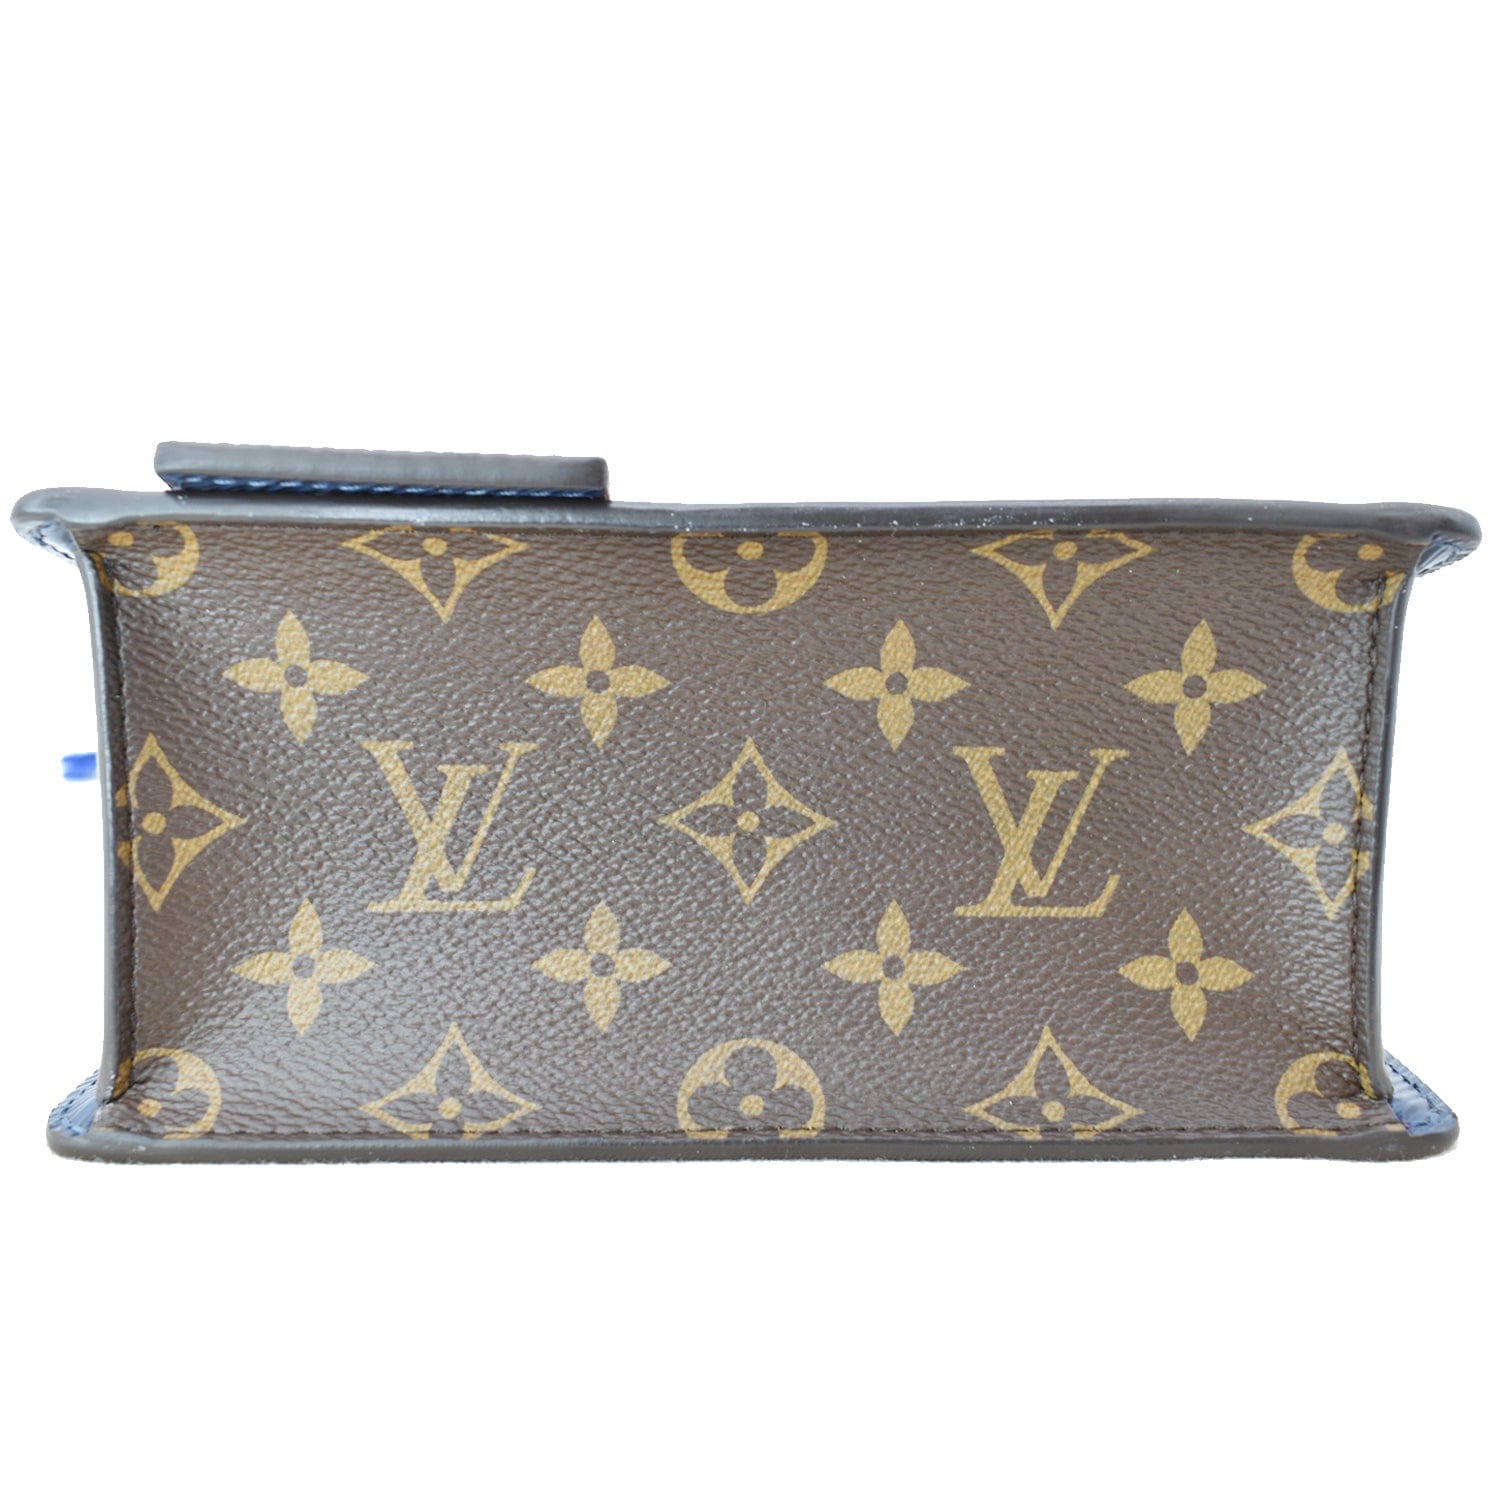 Authentic Preloved Louis Vuitton Monogram Vernis Spring Street Handbag